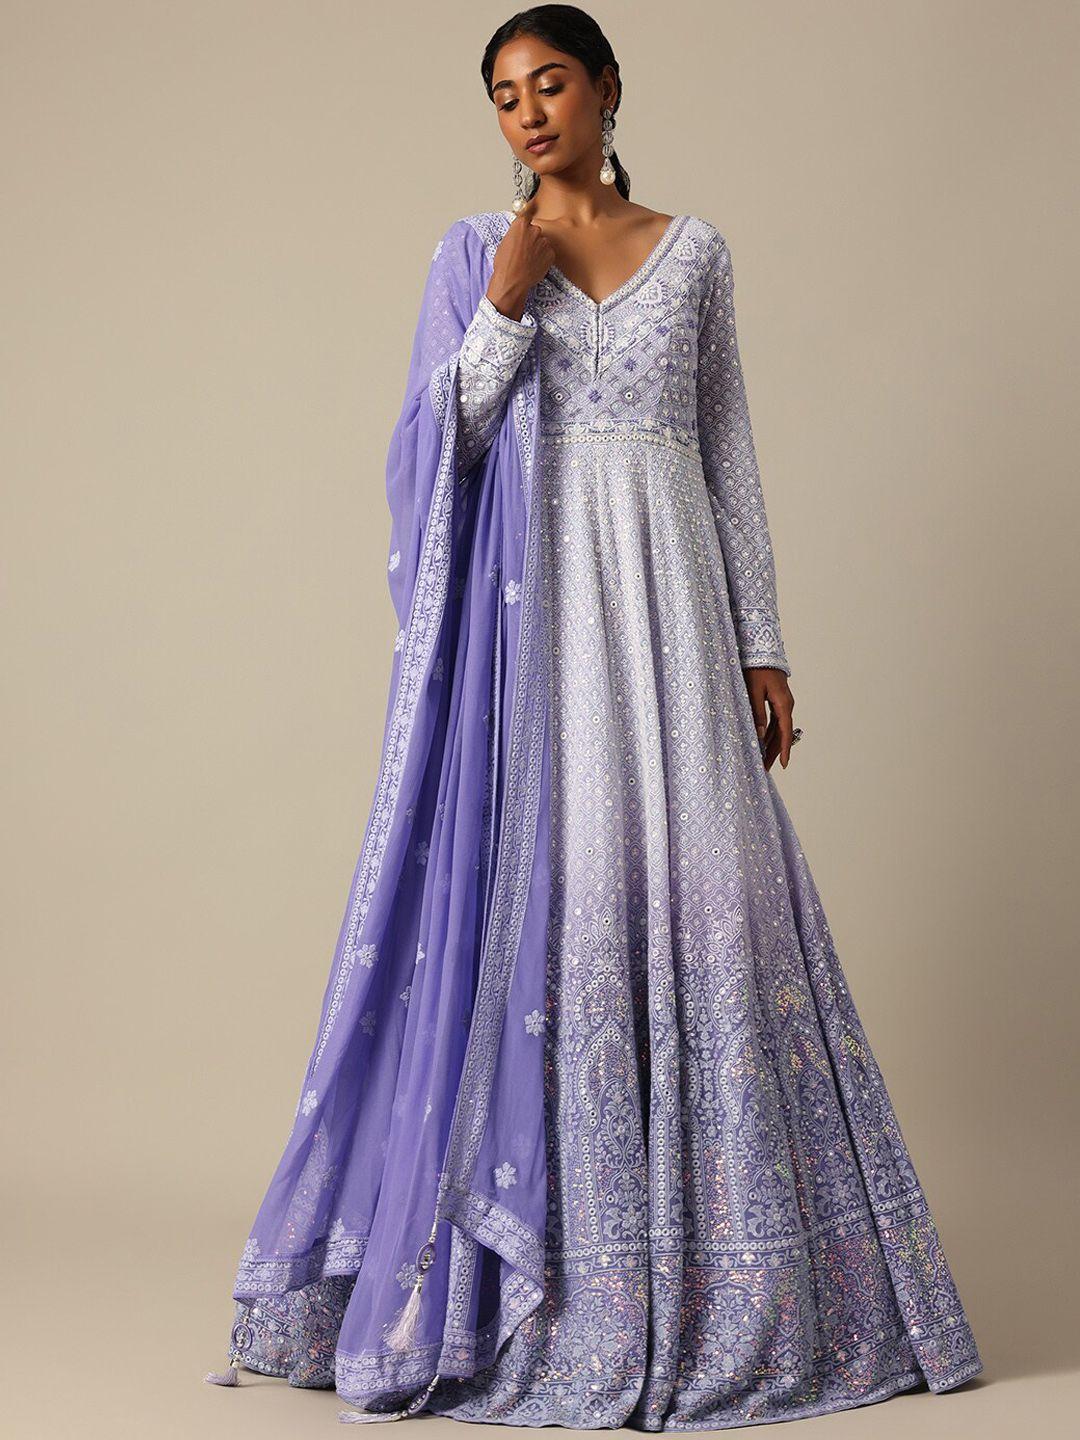 kalki fashion ethnic motifs embroidered embellished detail maxi ethnic dress with dupatta